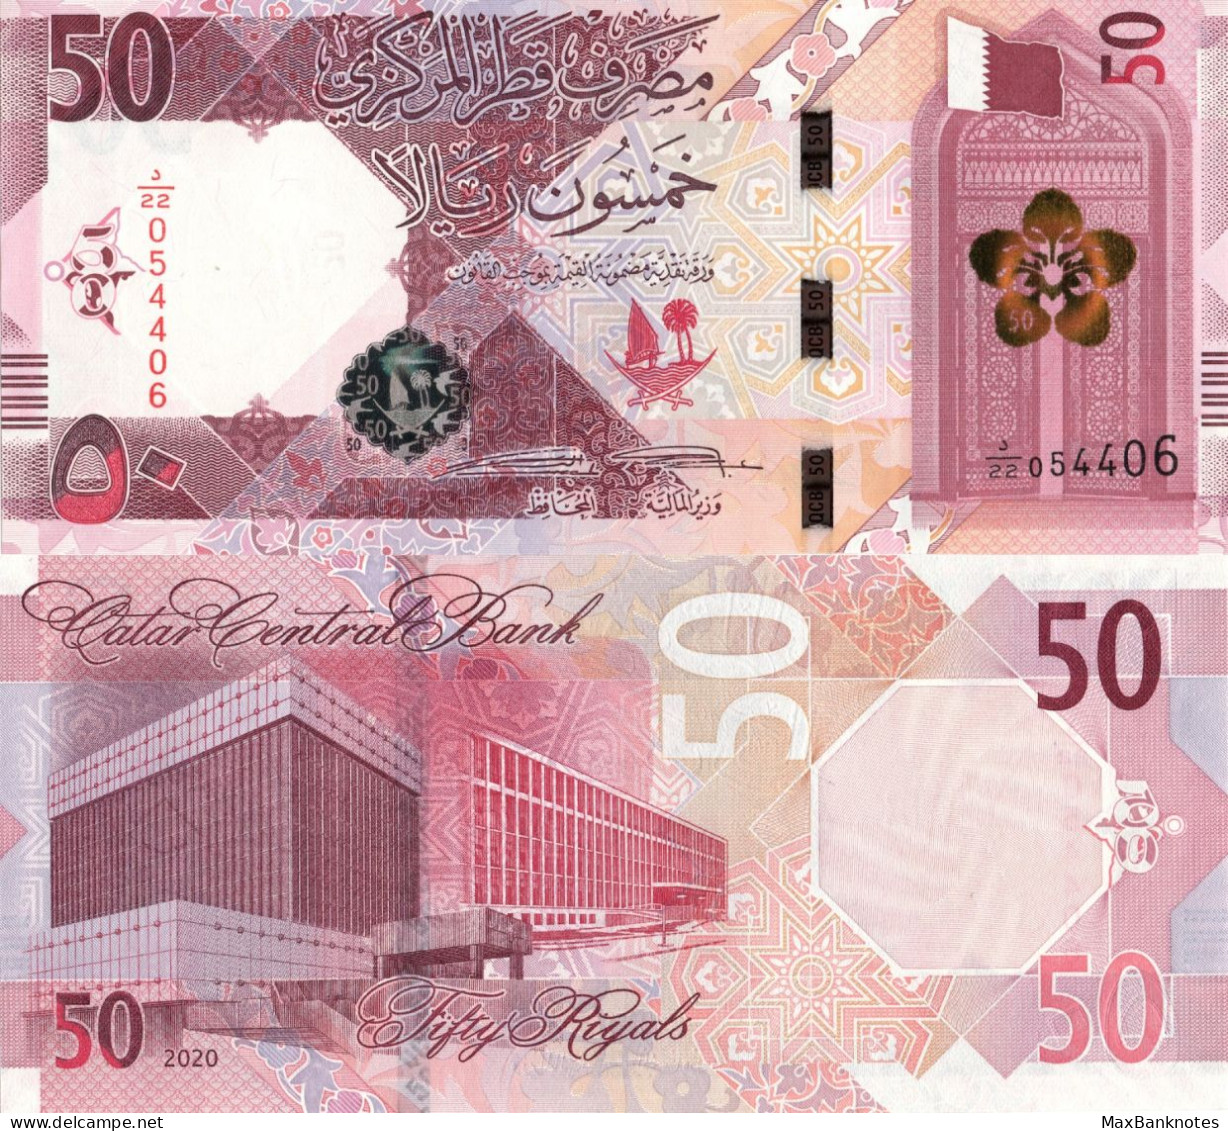 Qatar / 50 Dinars / 2020 / P-35(a) / UNC - Qatar